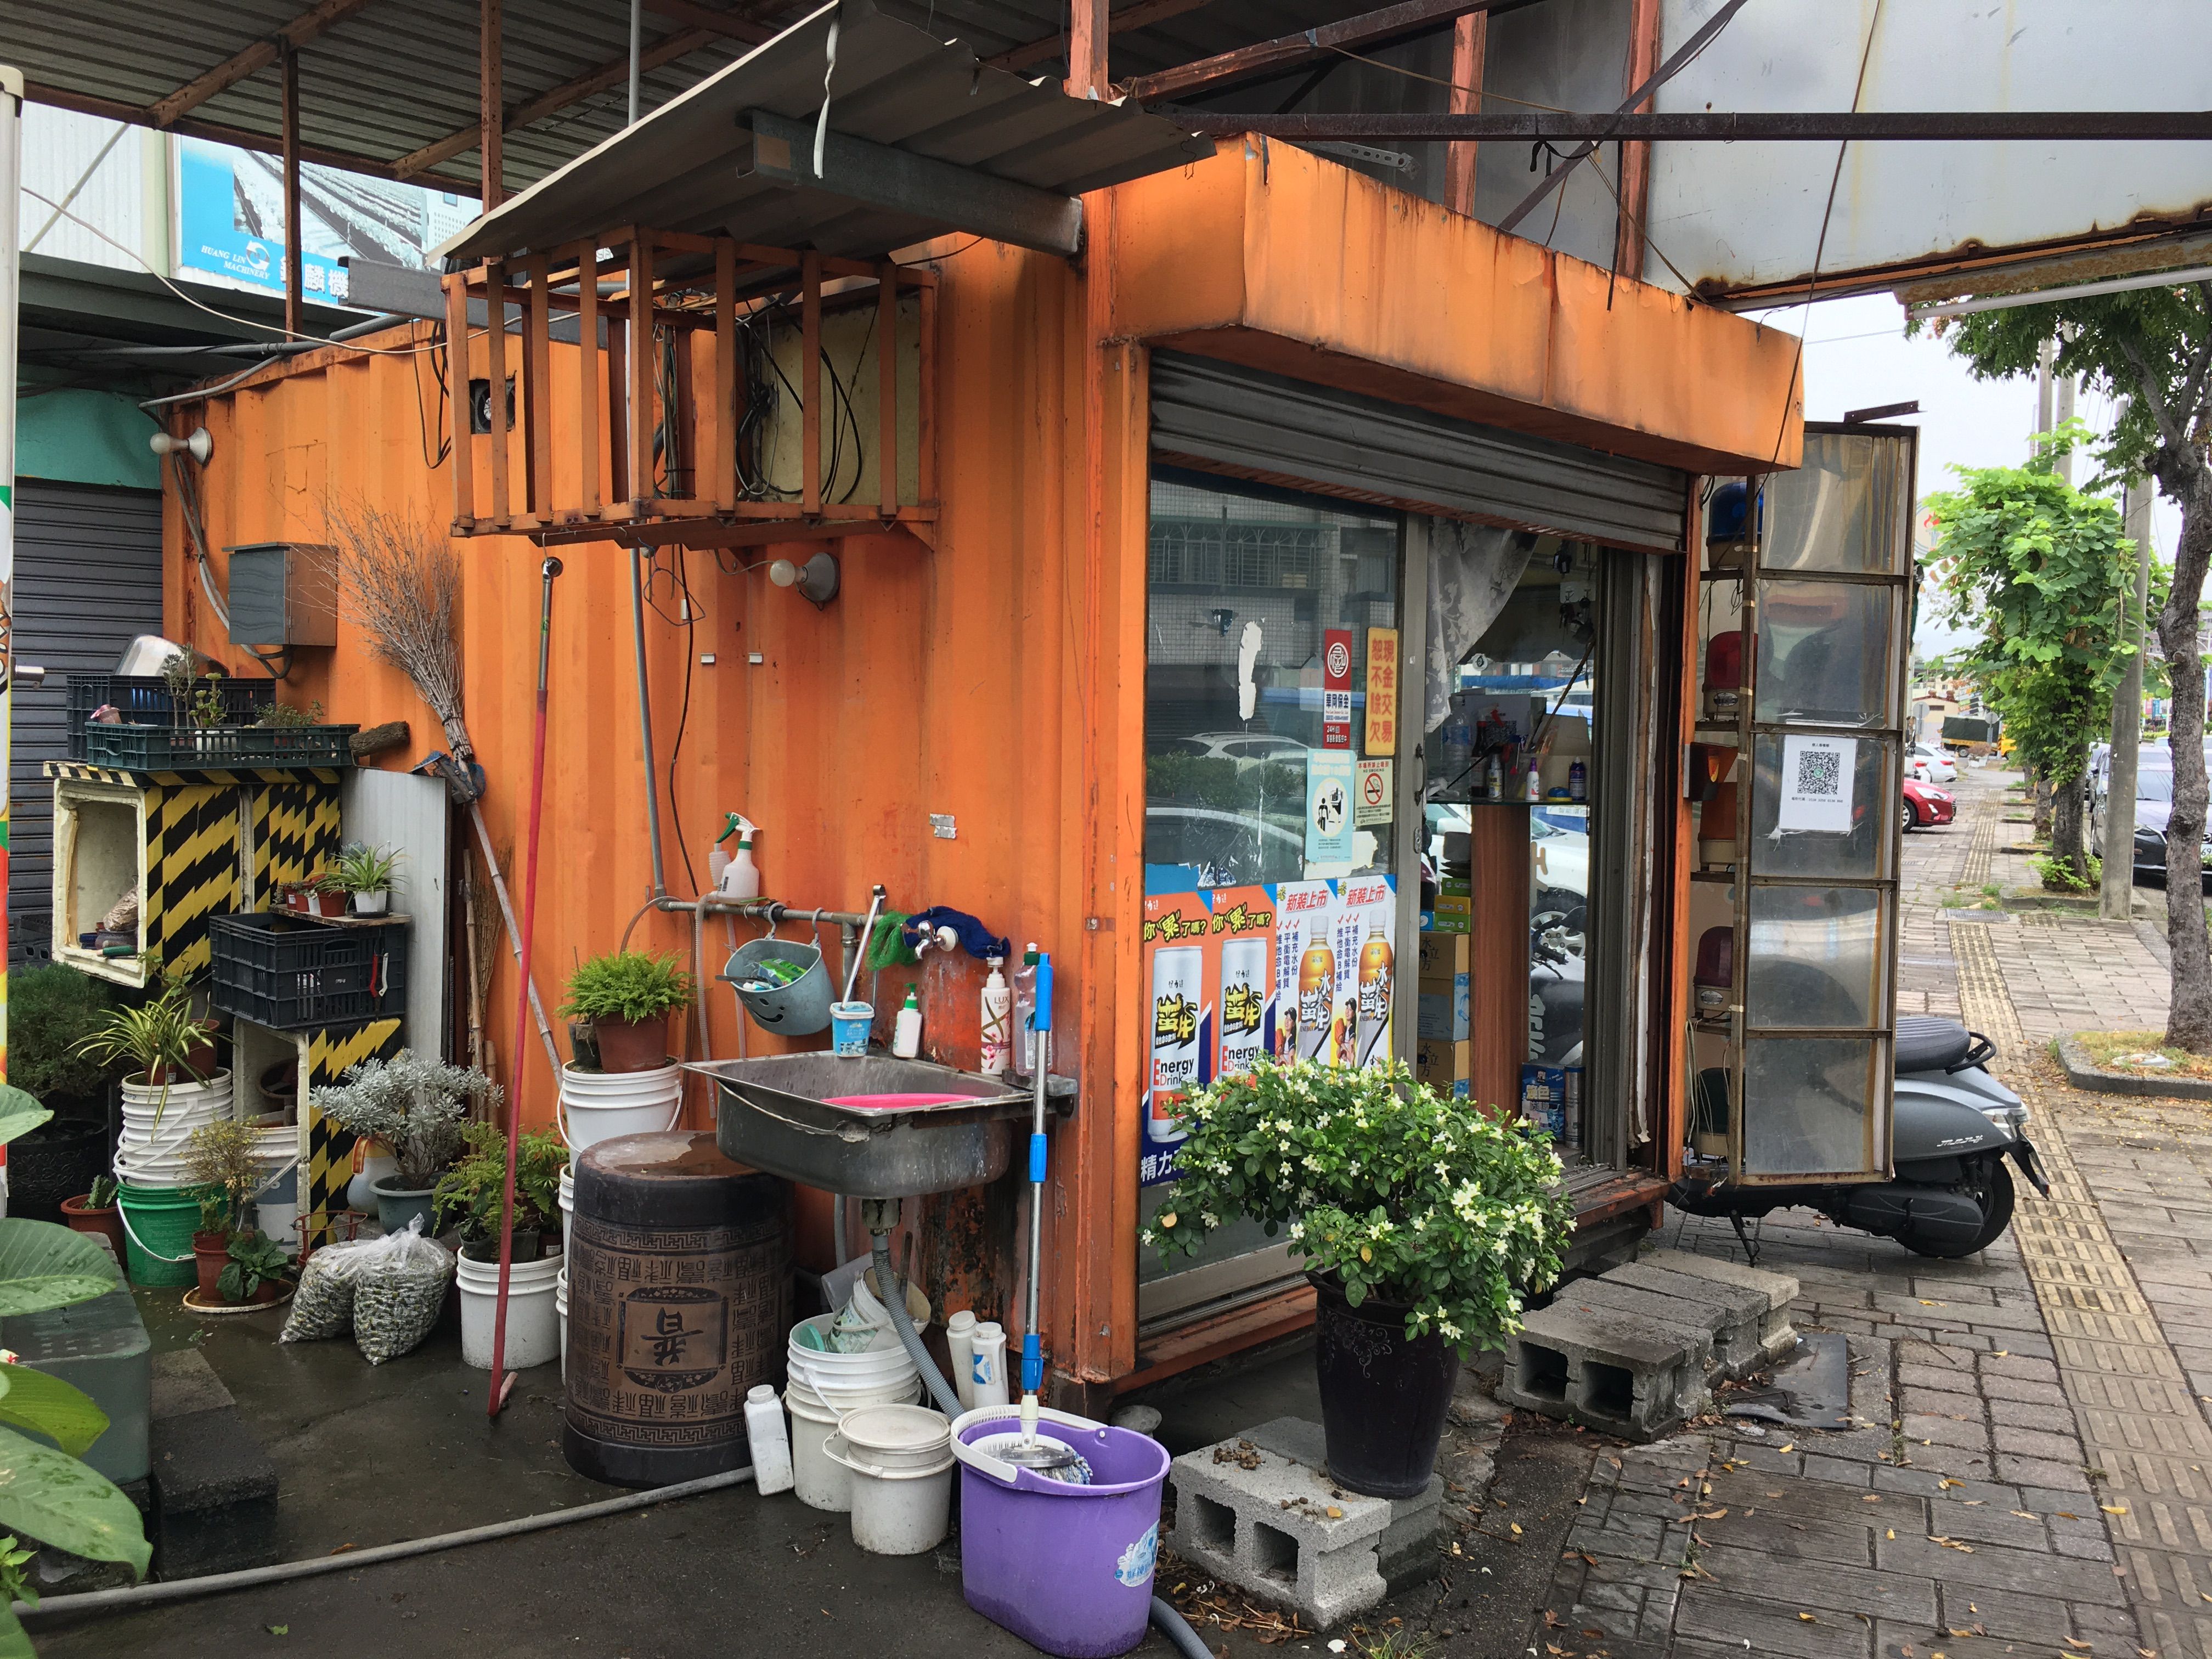 binlung shop on cinder blocks